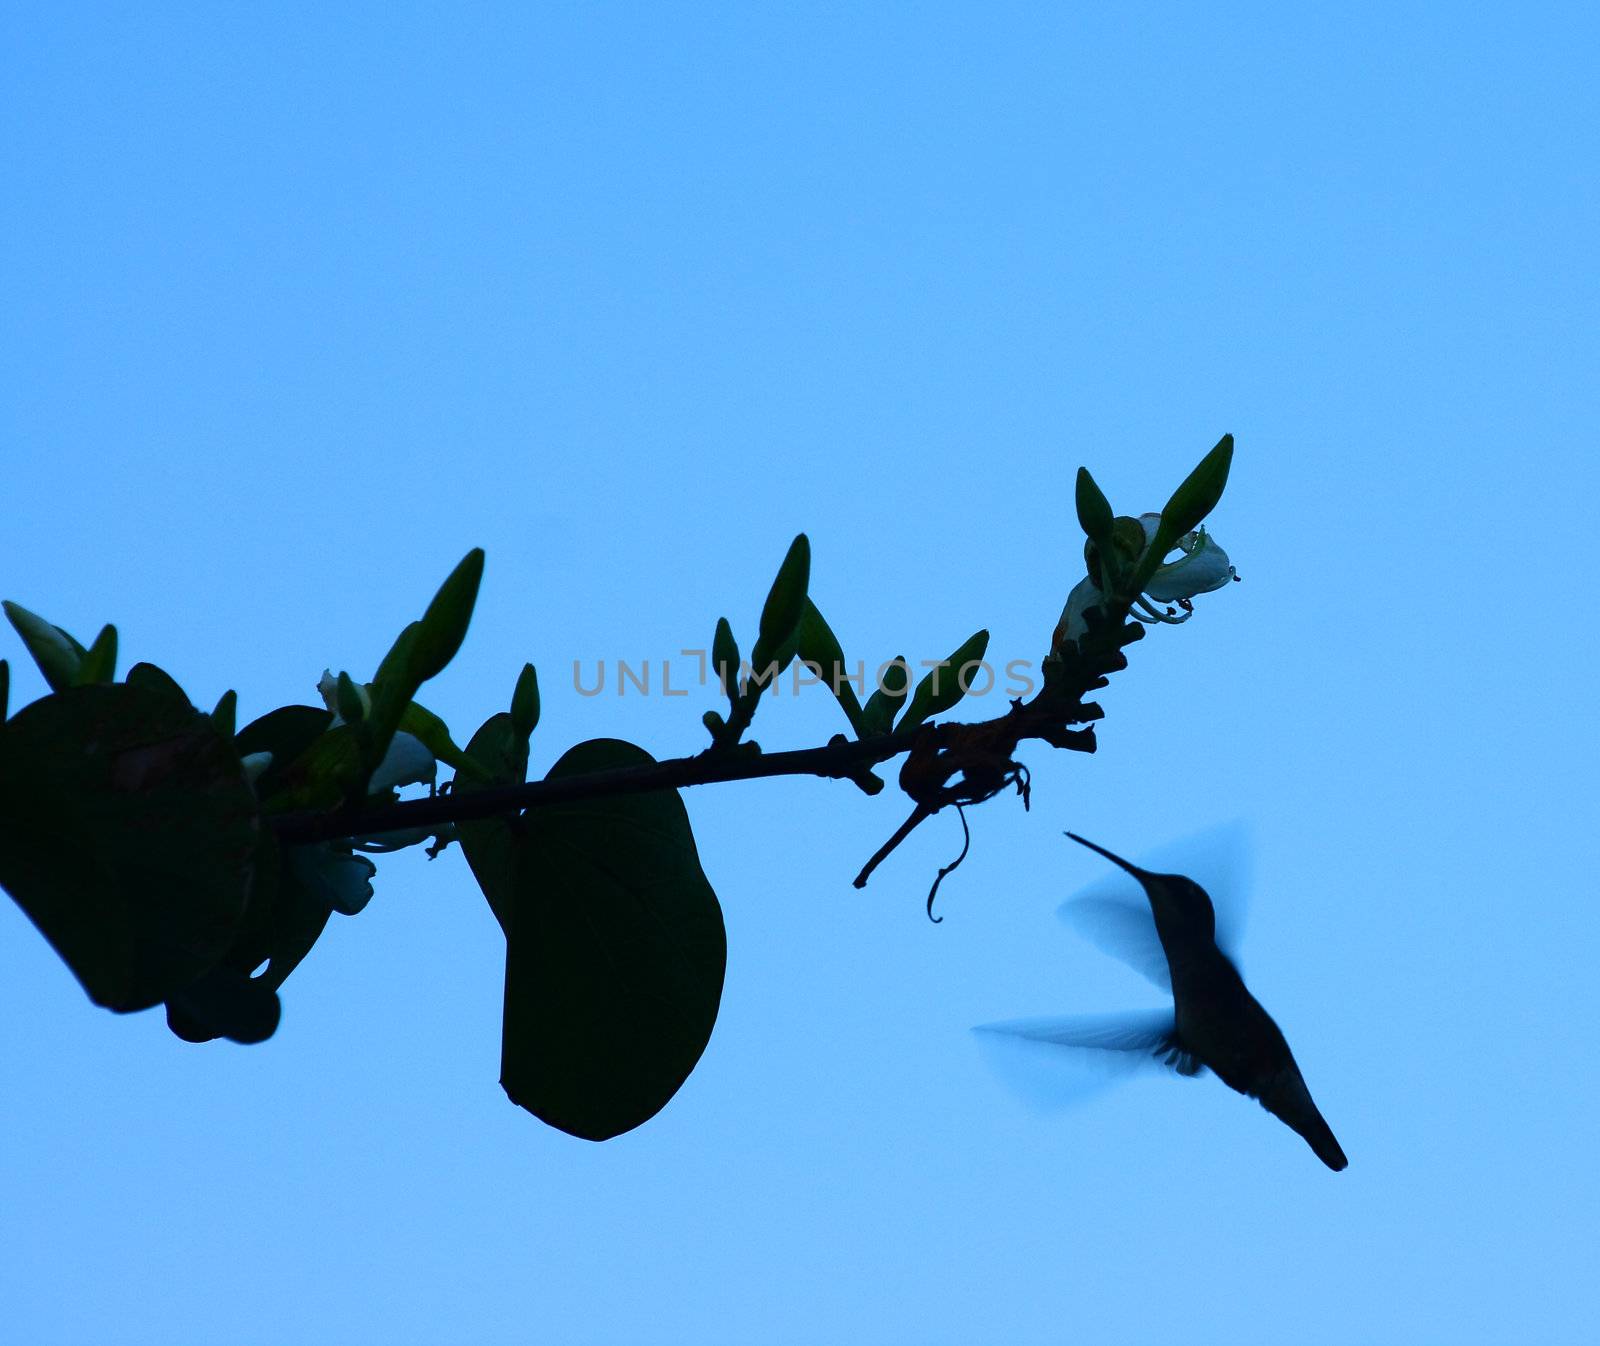 Humming Bird in silhouette.